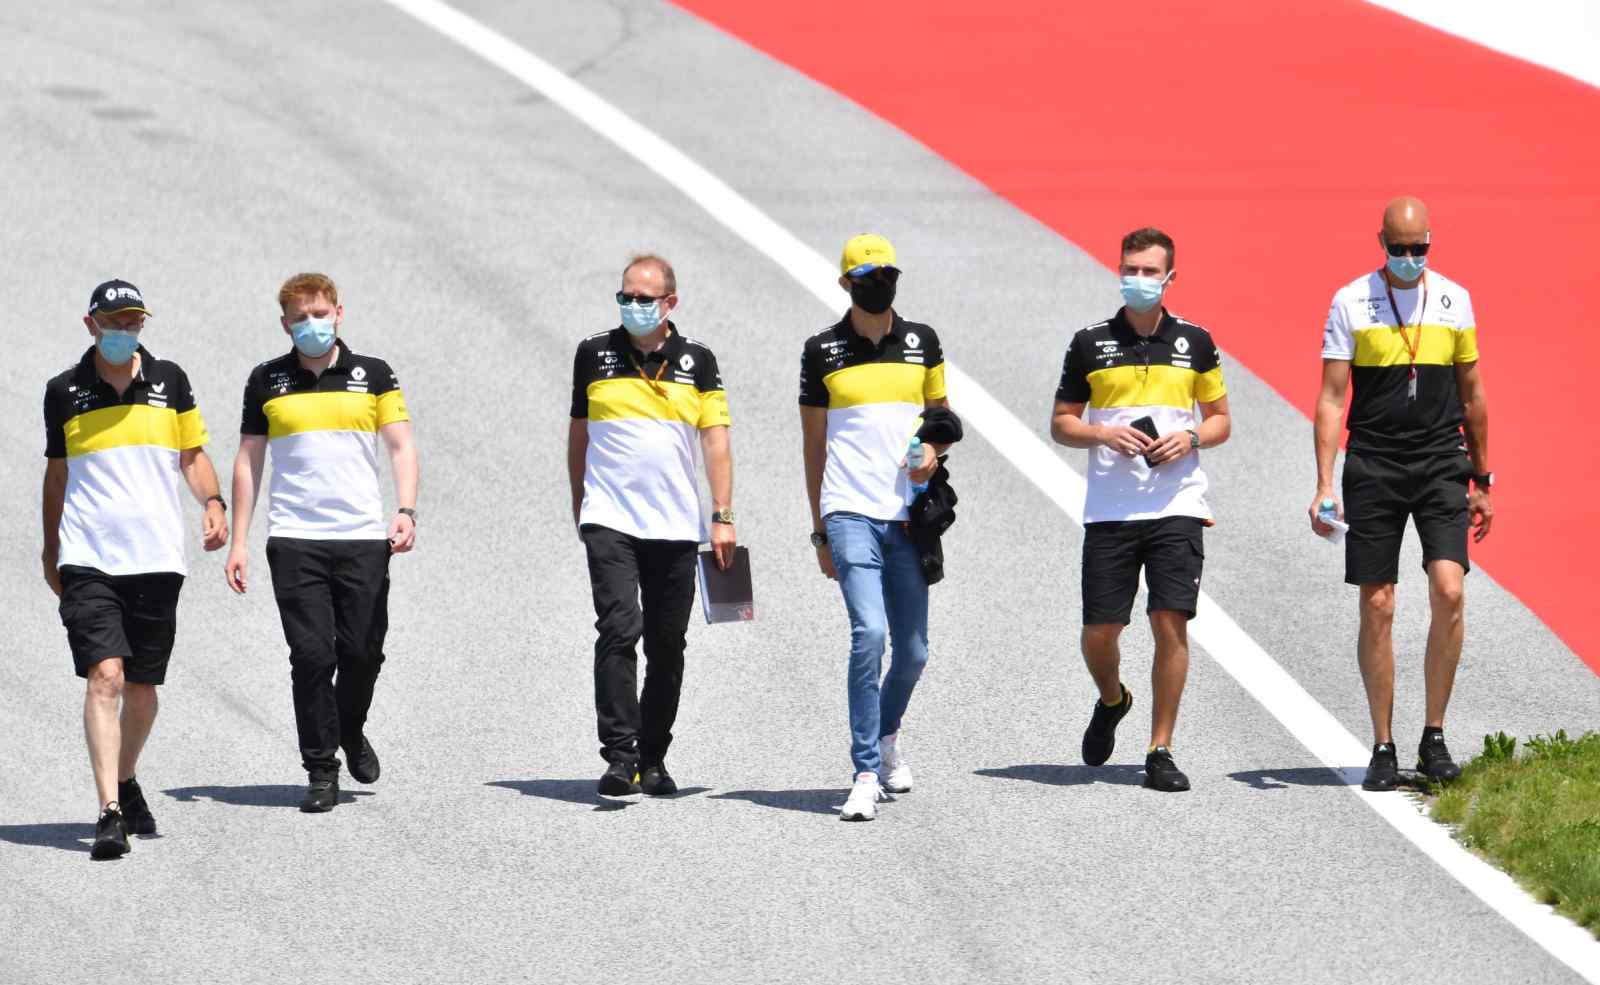 Fica difícil de identificar os pilotos com as máscaras, mas este é Esteban Ocon andando pela pista da Áustria com alguns membros da Renault. Todos respeitando as regras do distanciamento 